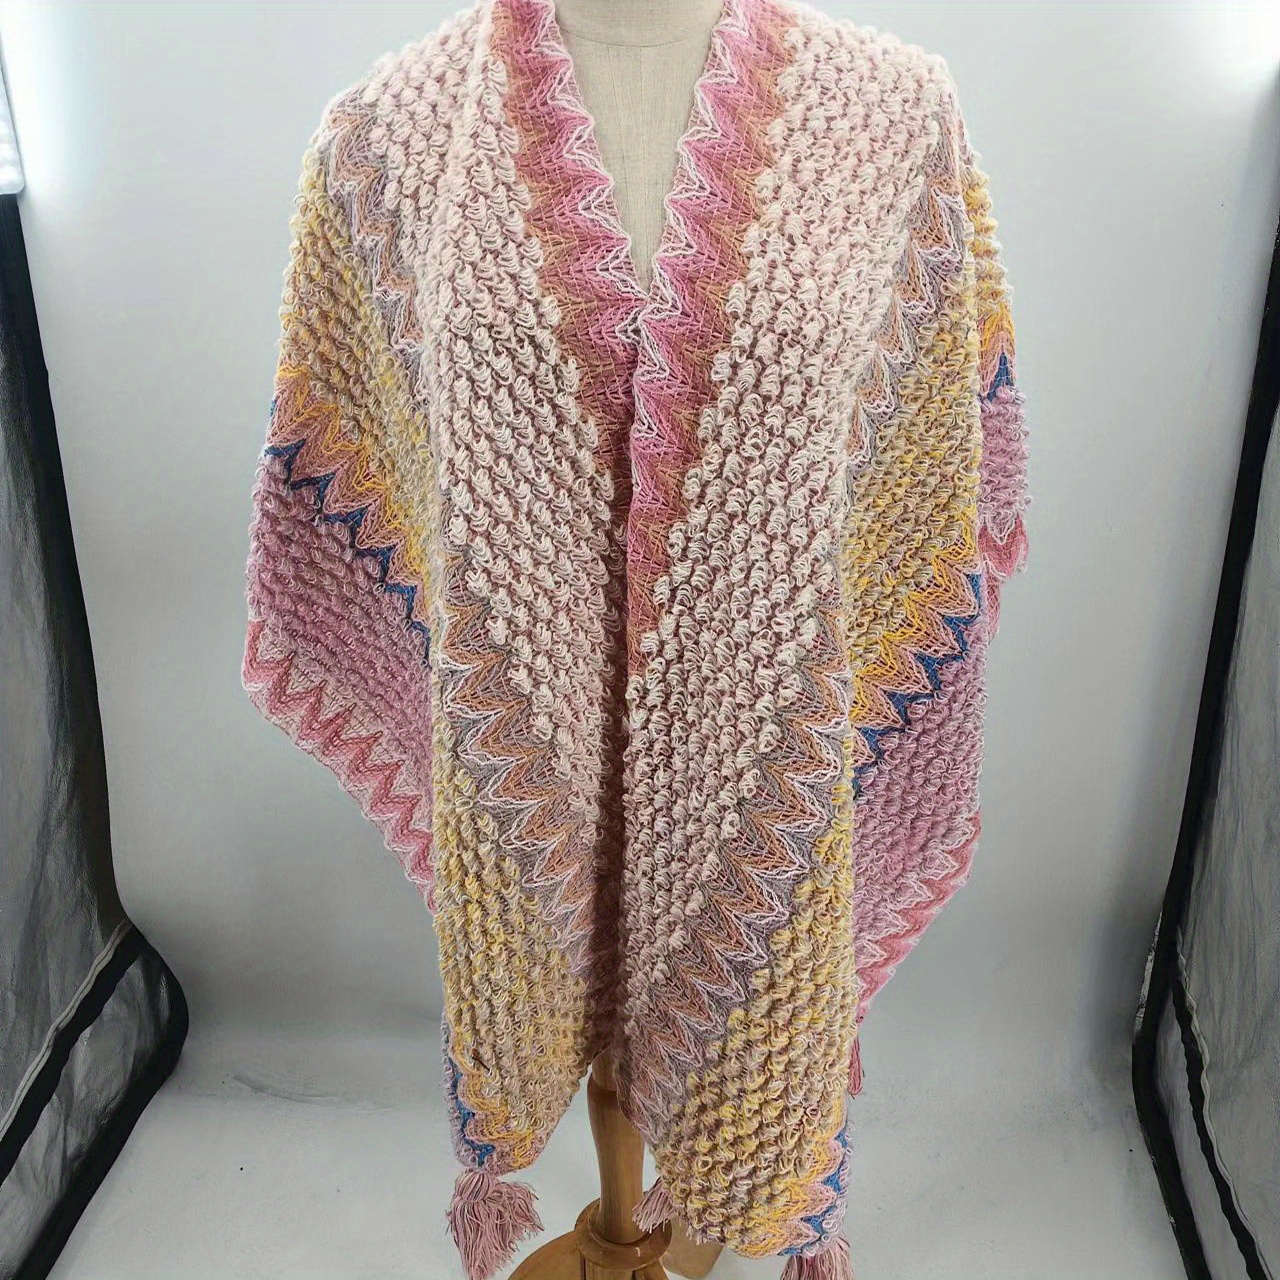 Bohemian Plaid Tassel Shawl Vintage Knitted Warm Cape Wraps